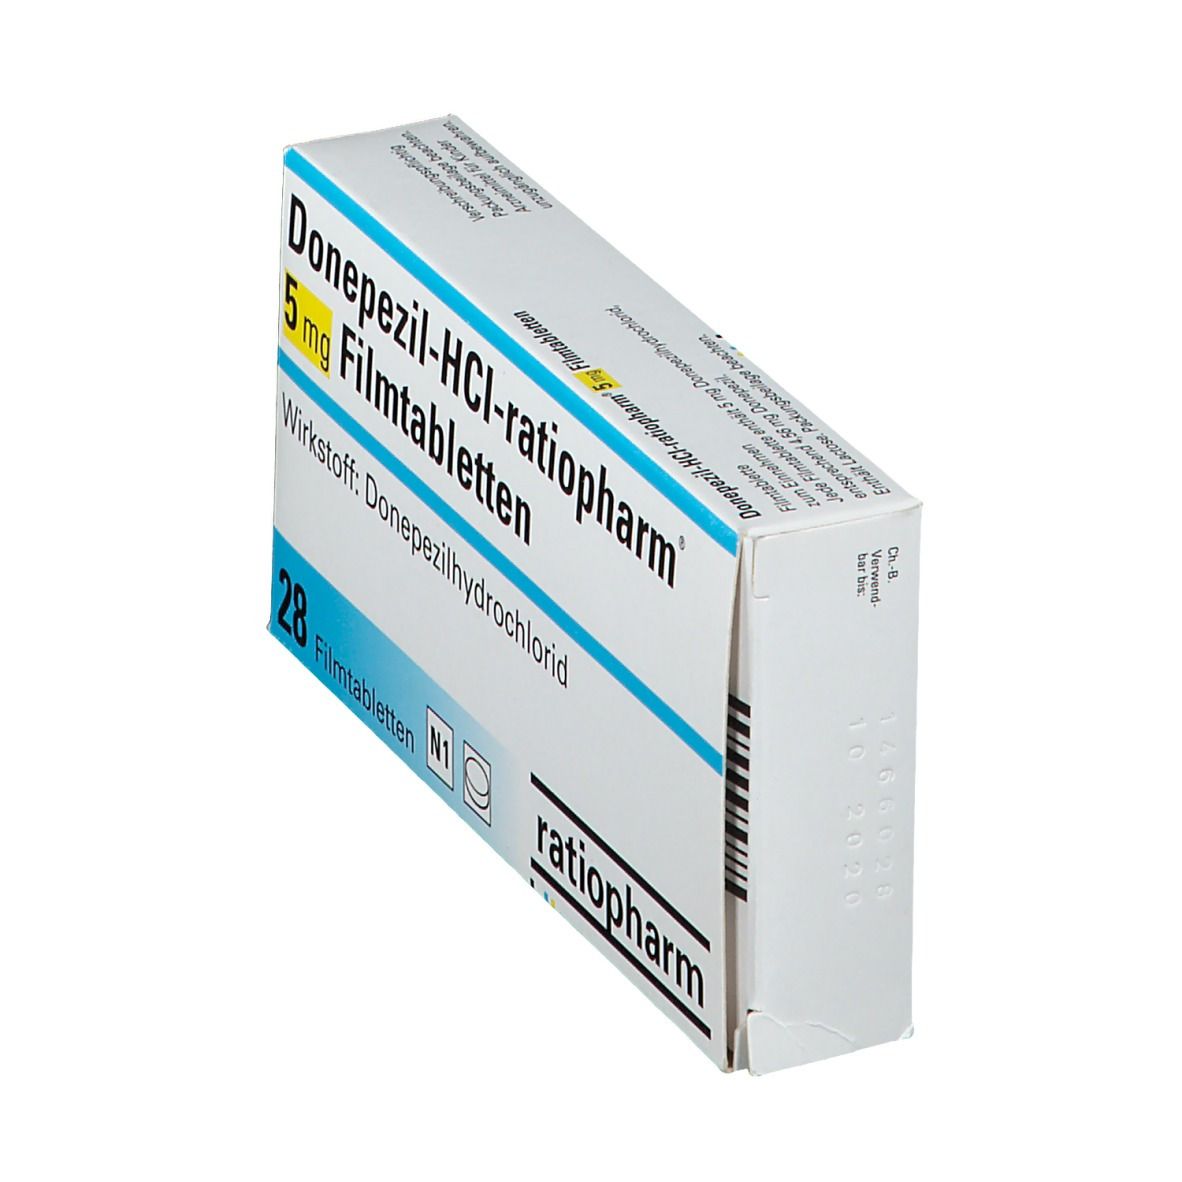 Donepezil-HCl-ratiopharm® 5 mg